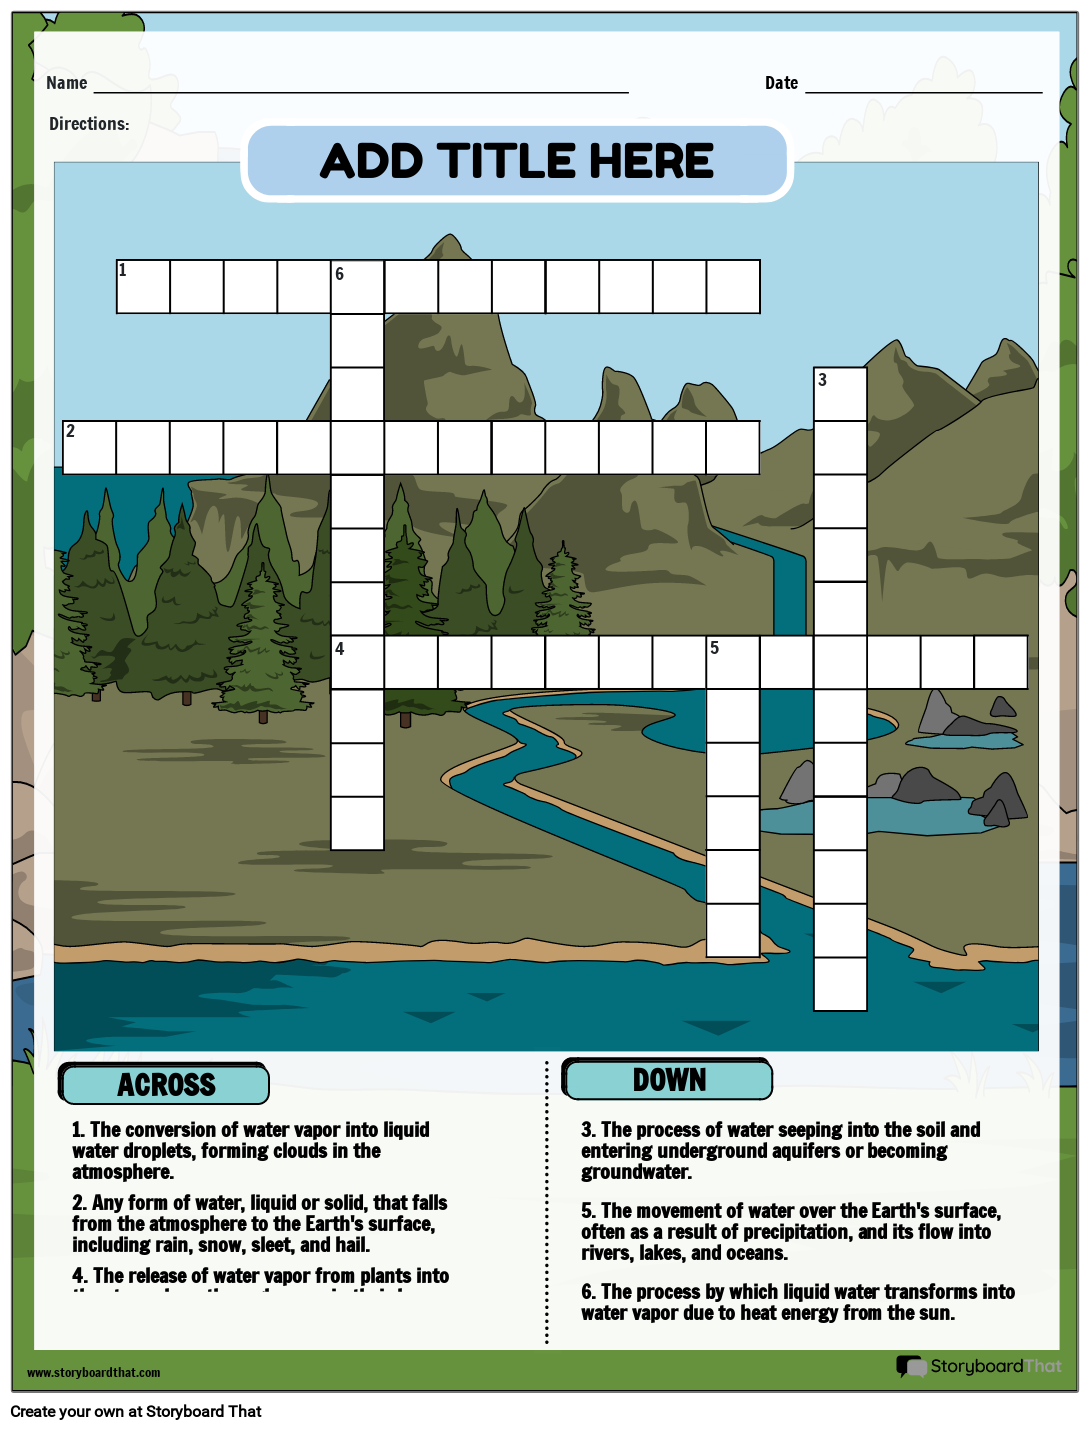 Water Cycle Crossword